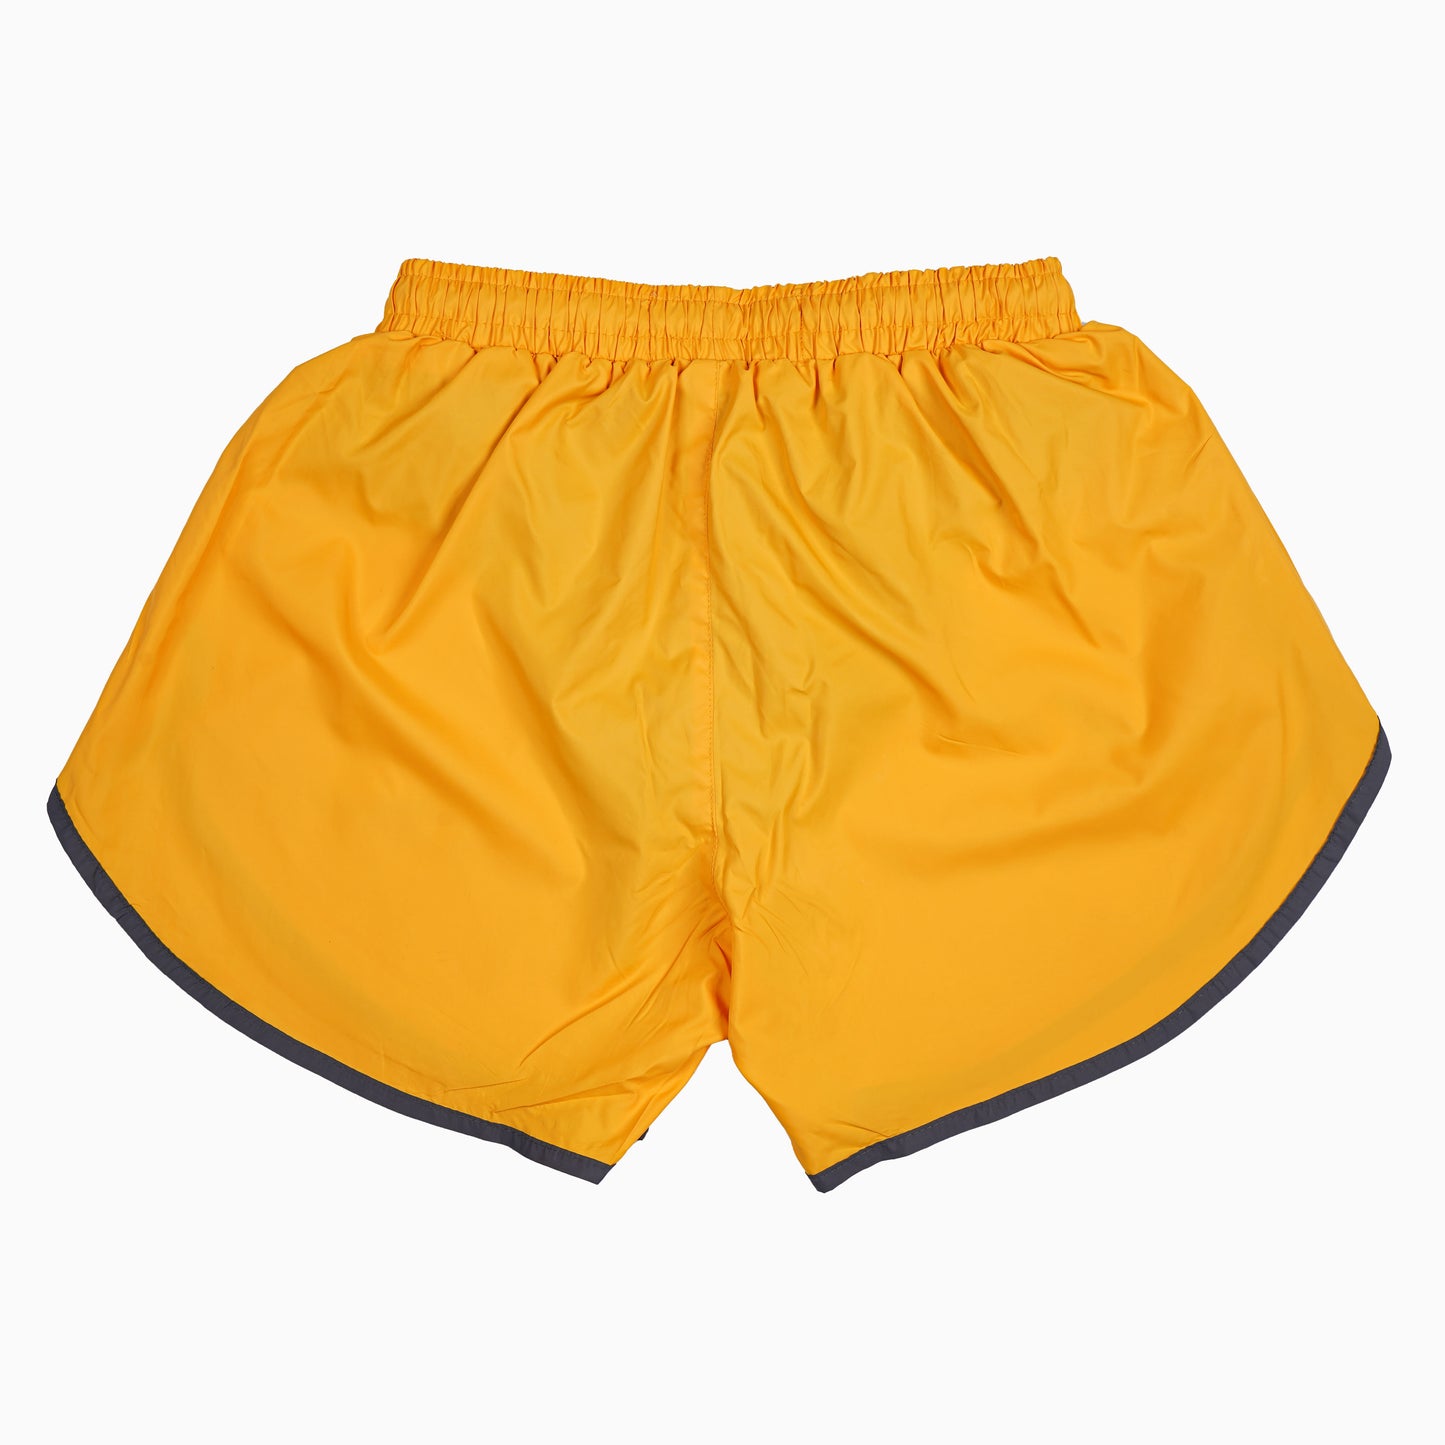 Studd Muffyn "Feels Like Naked" Shorts- Sunny Yellow